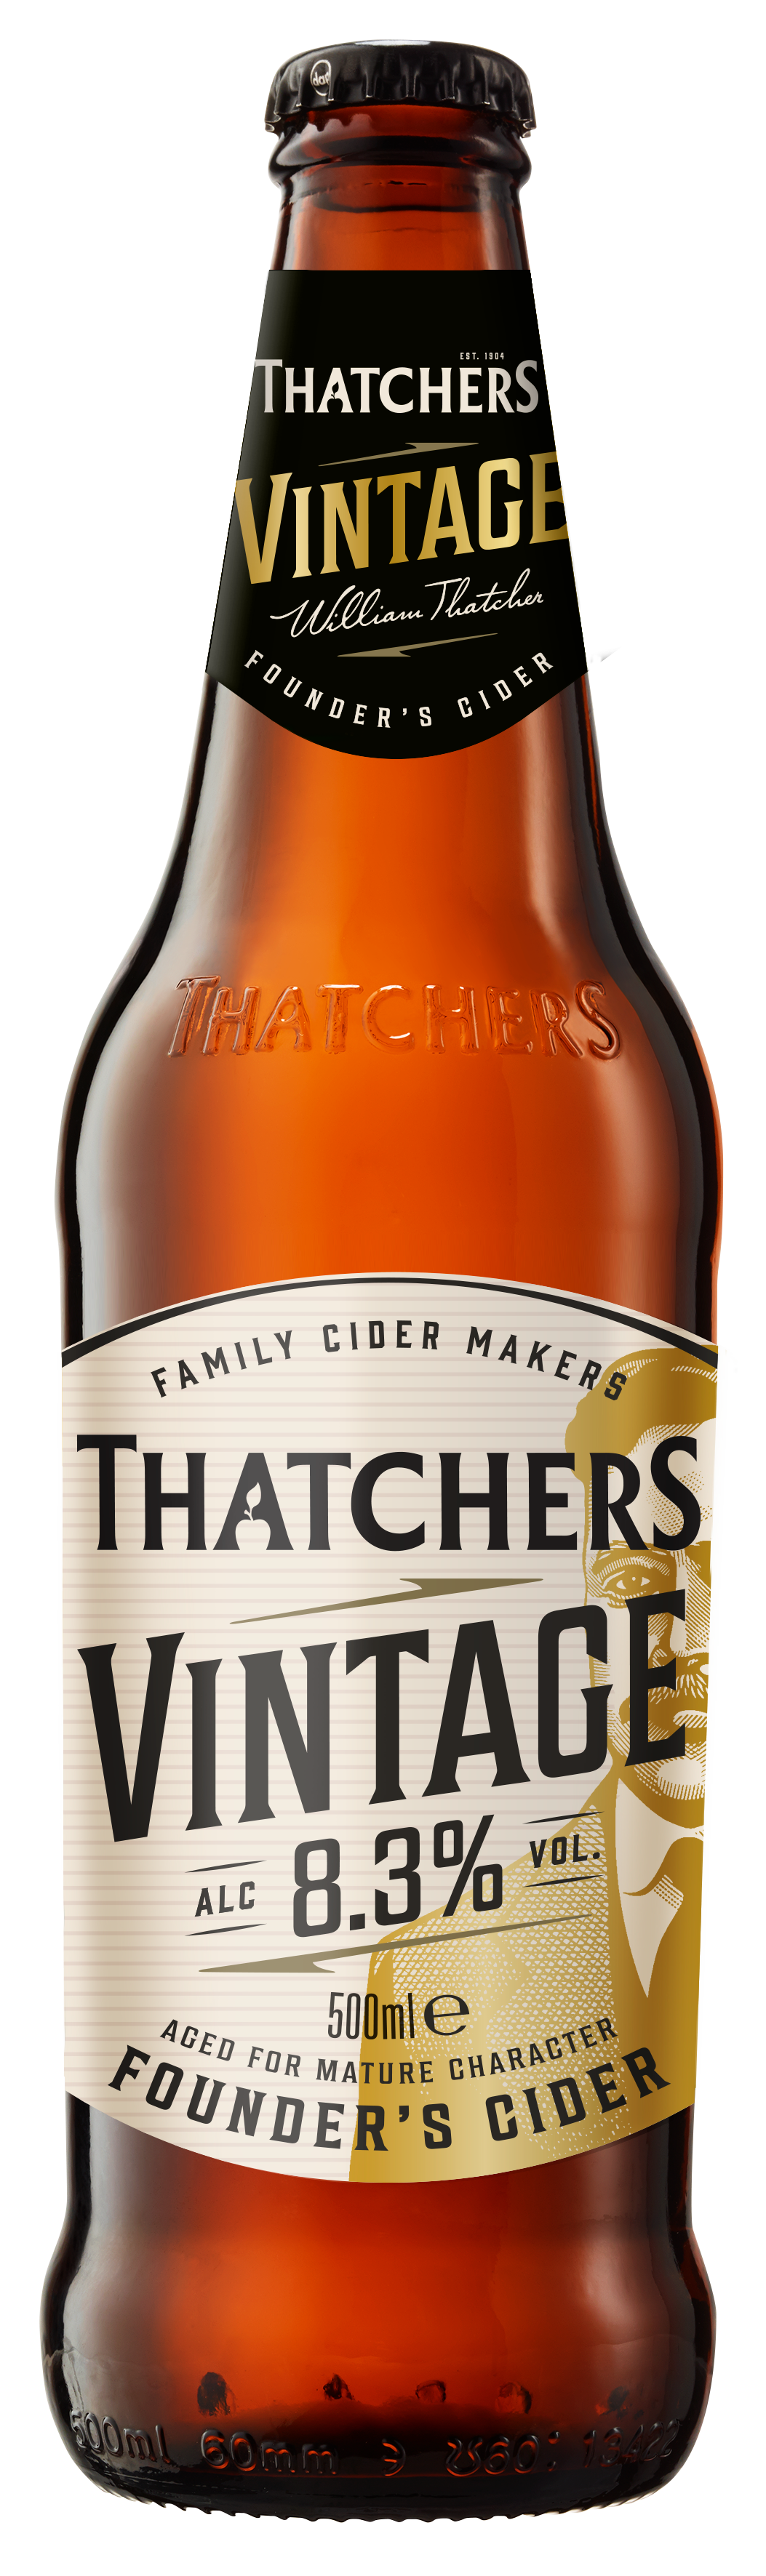 Thatchers unveils new look vintage cider